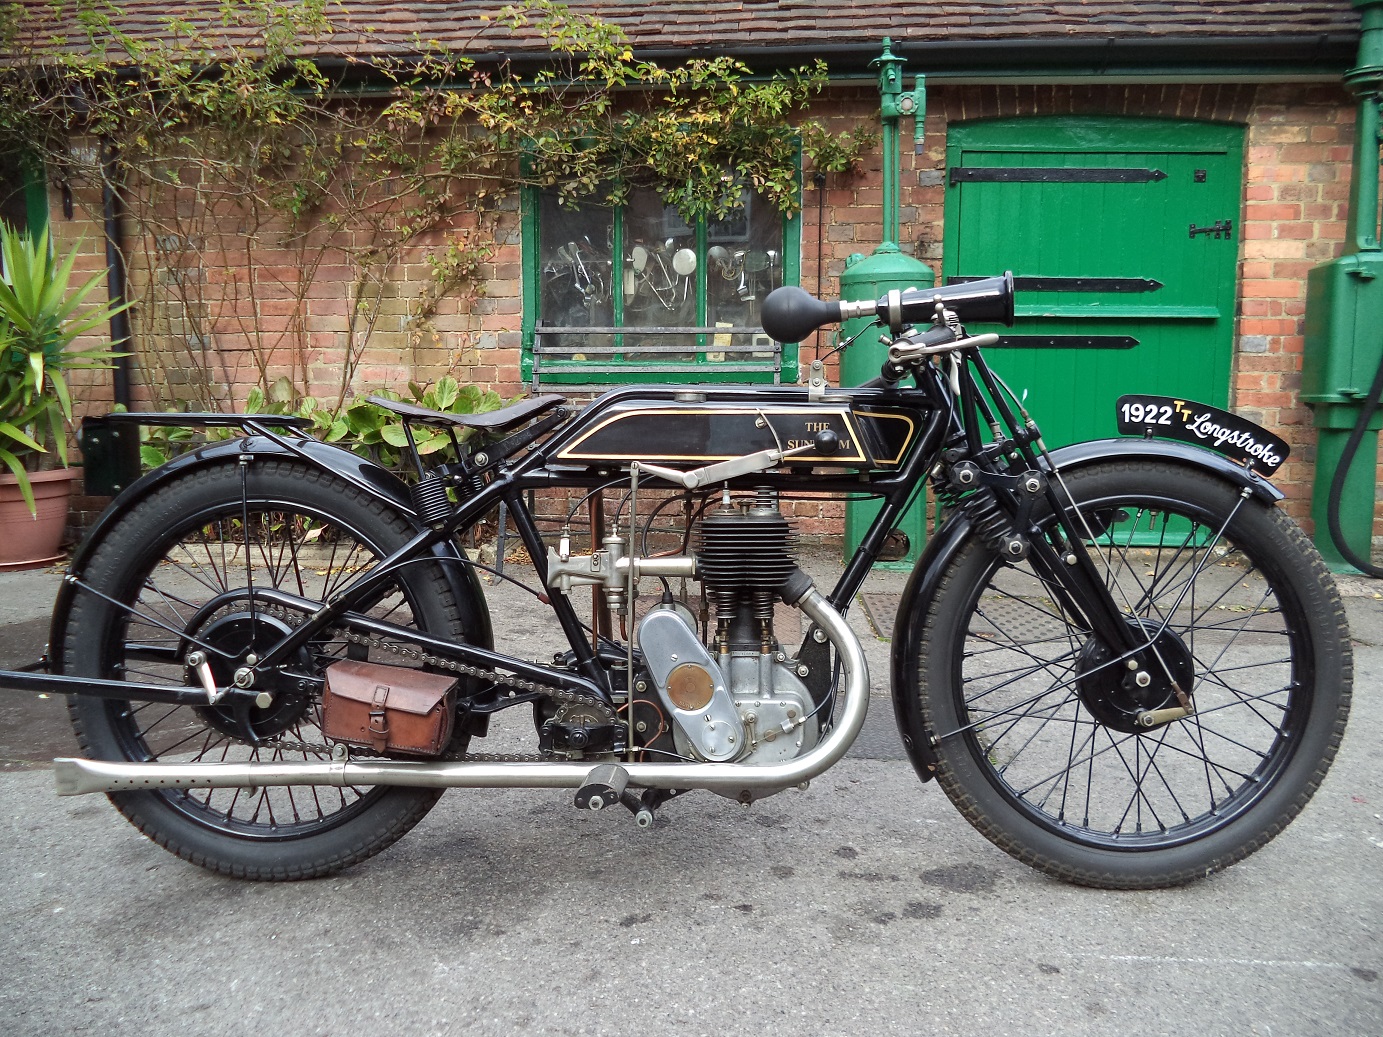 vintage british motorcycles for sale uk